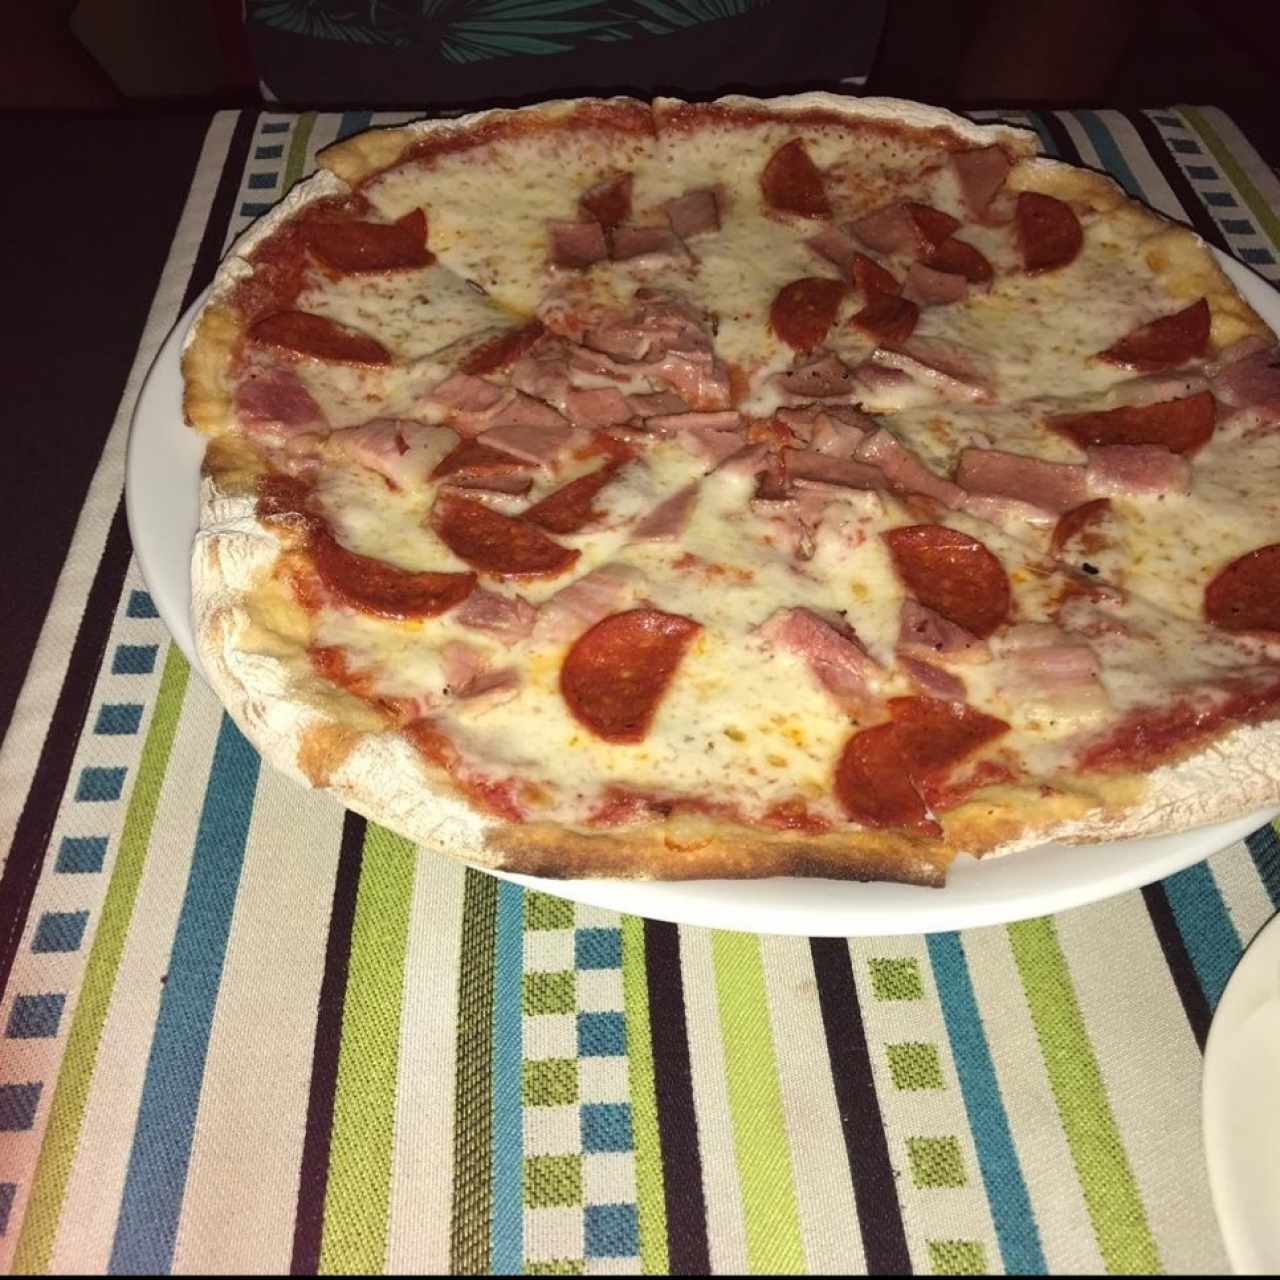 Pizza Enrico